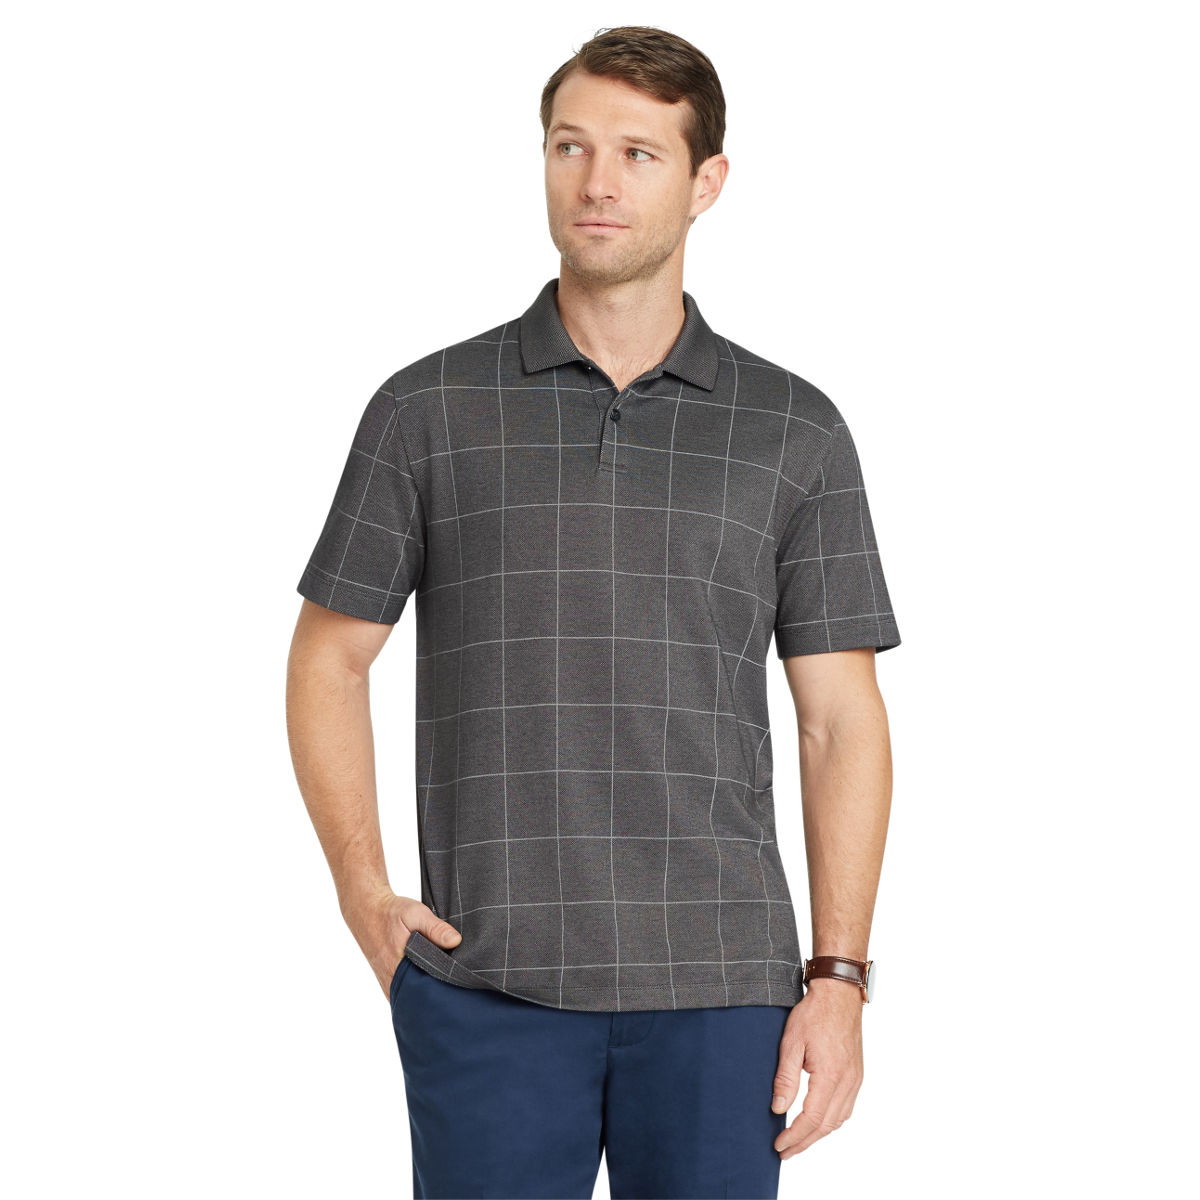 Van Heusen Men's Flex Print Windowpane Short-Sleeve Polo Shirt - Black, XXL